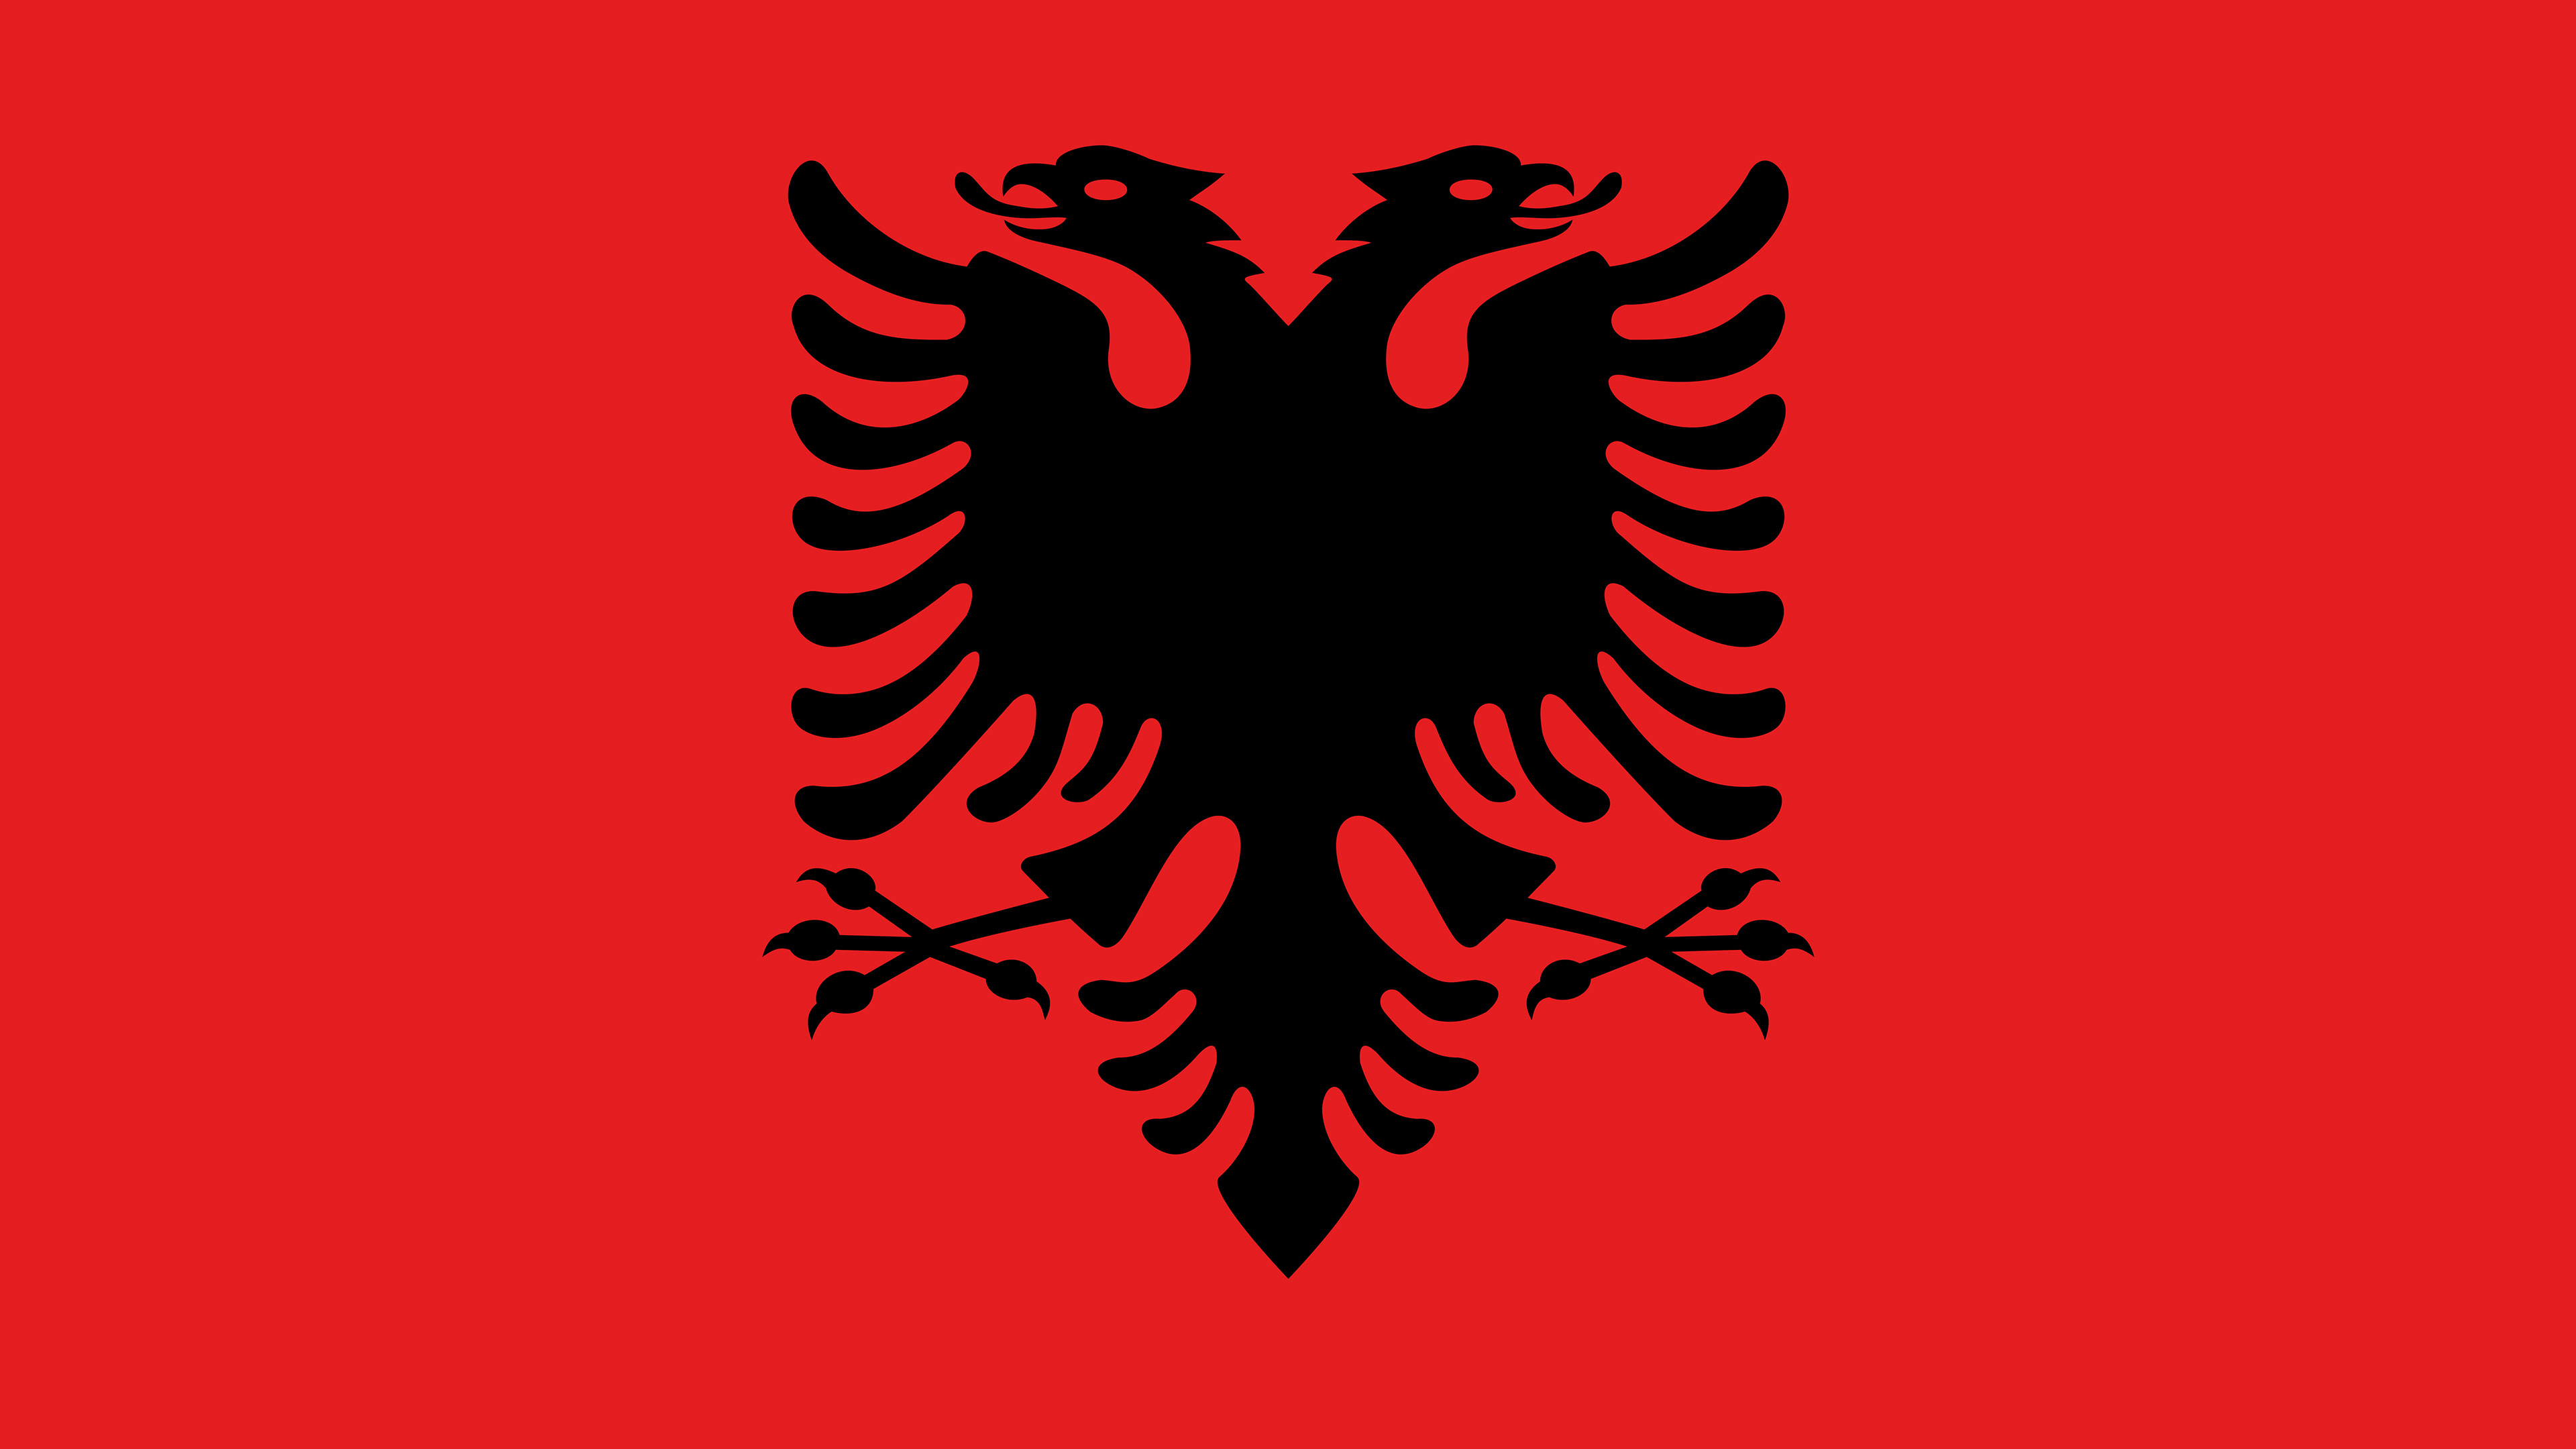 Albanian flag, UHD wallpaper, National symbol, Patriotic pride, 3840x2160 4K Desktop